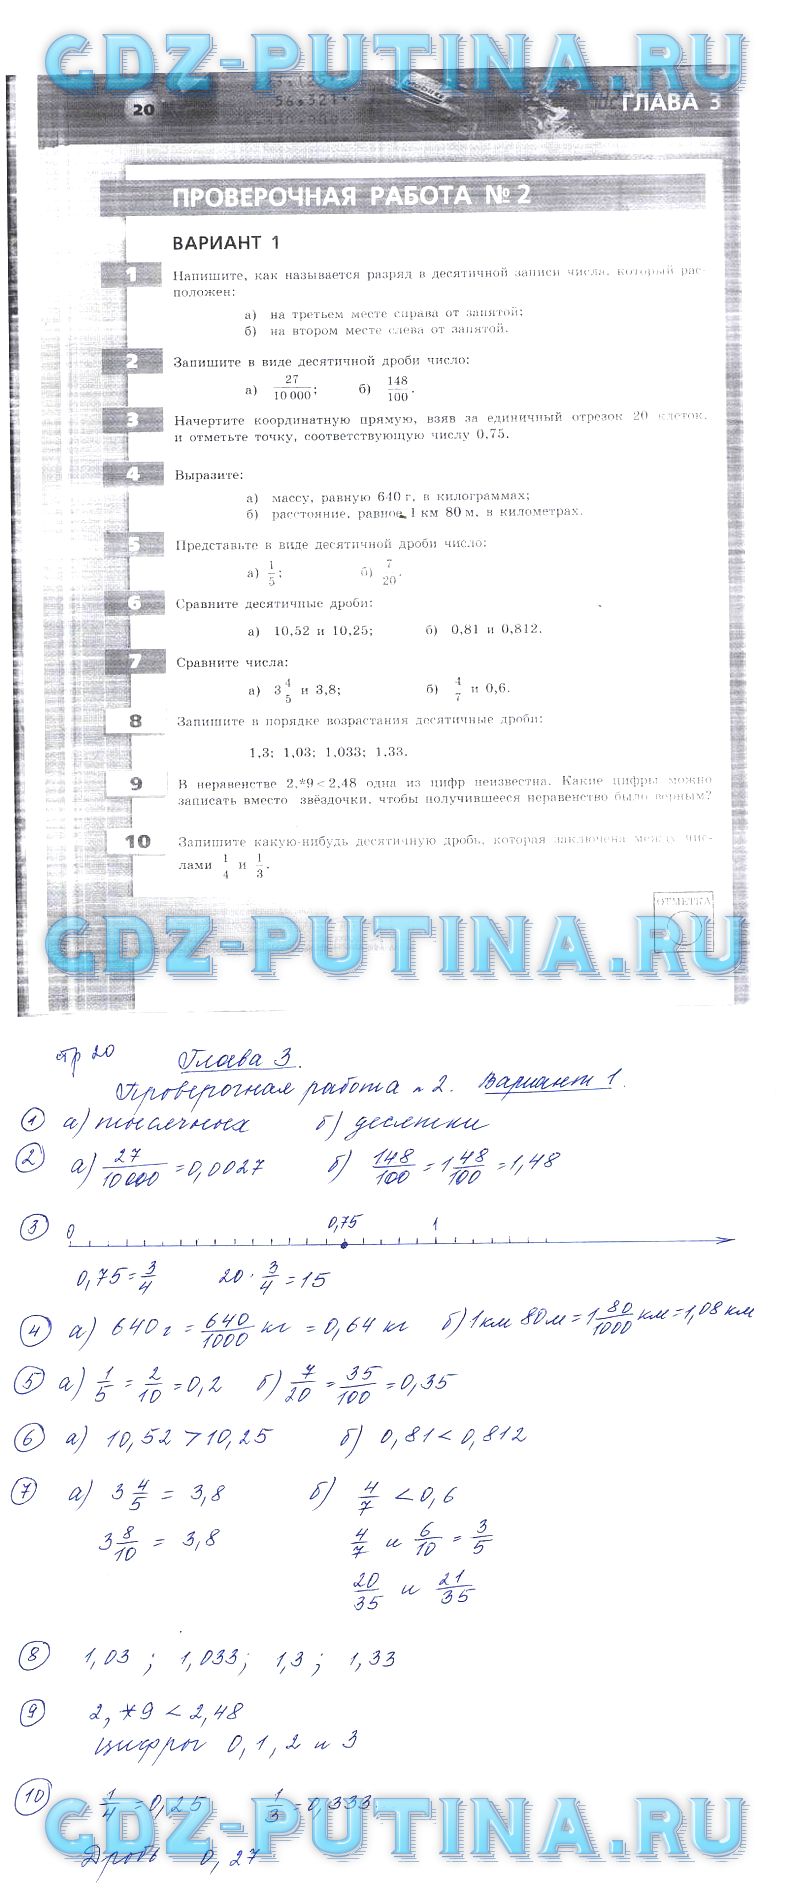 гдз 6 класс тетрадь-экзаменатор страница 20 математика Кузнецова